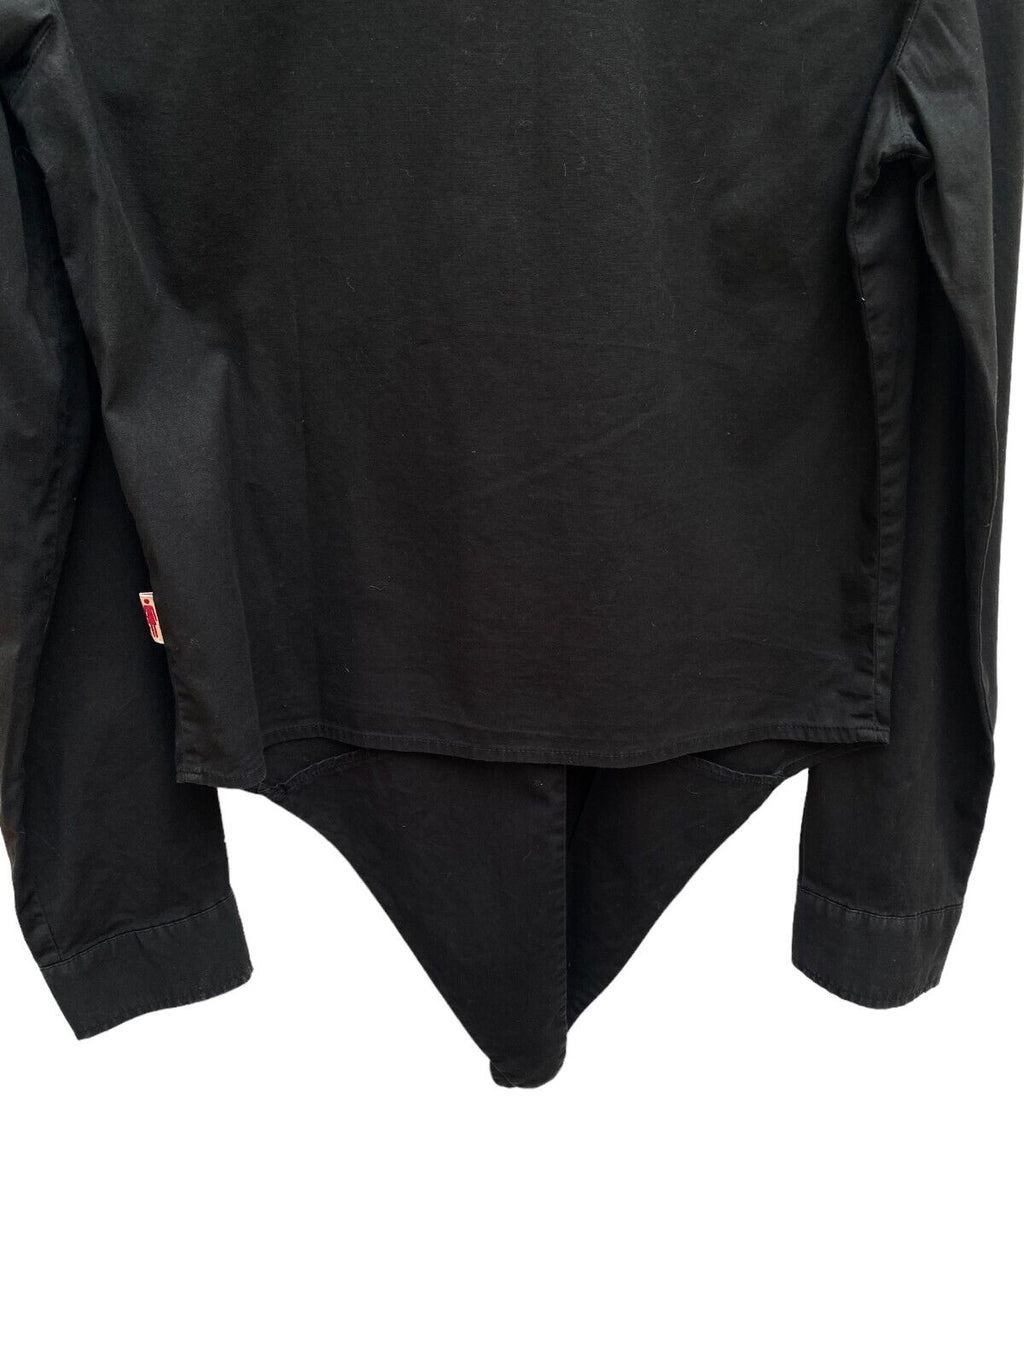 Vintage JPG Black Shirt  Size IT 38 fits S - US 6